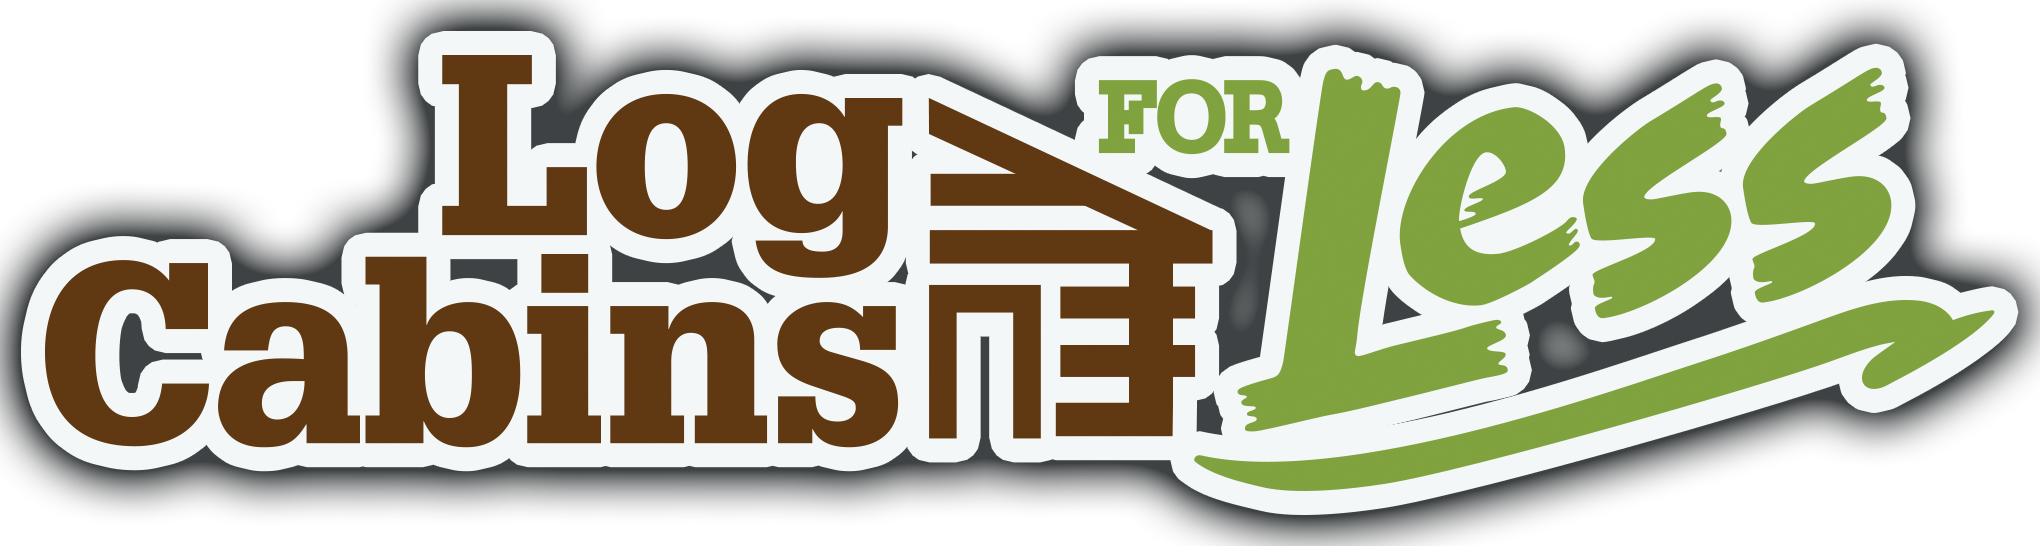 Log Cabins for Less Logo